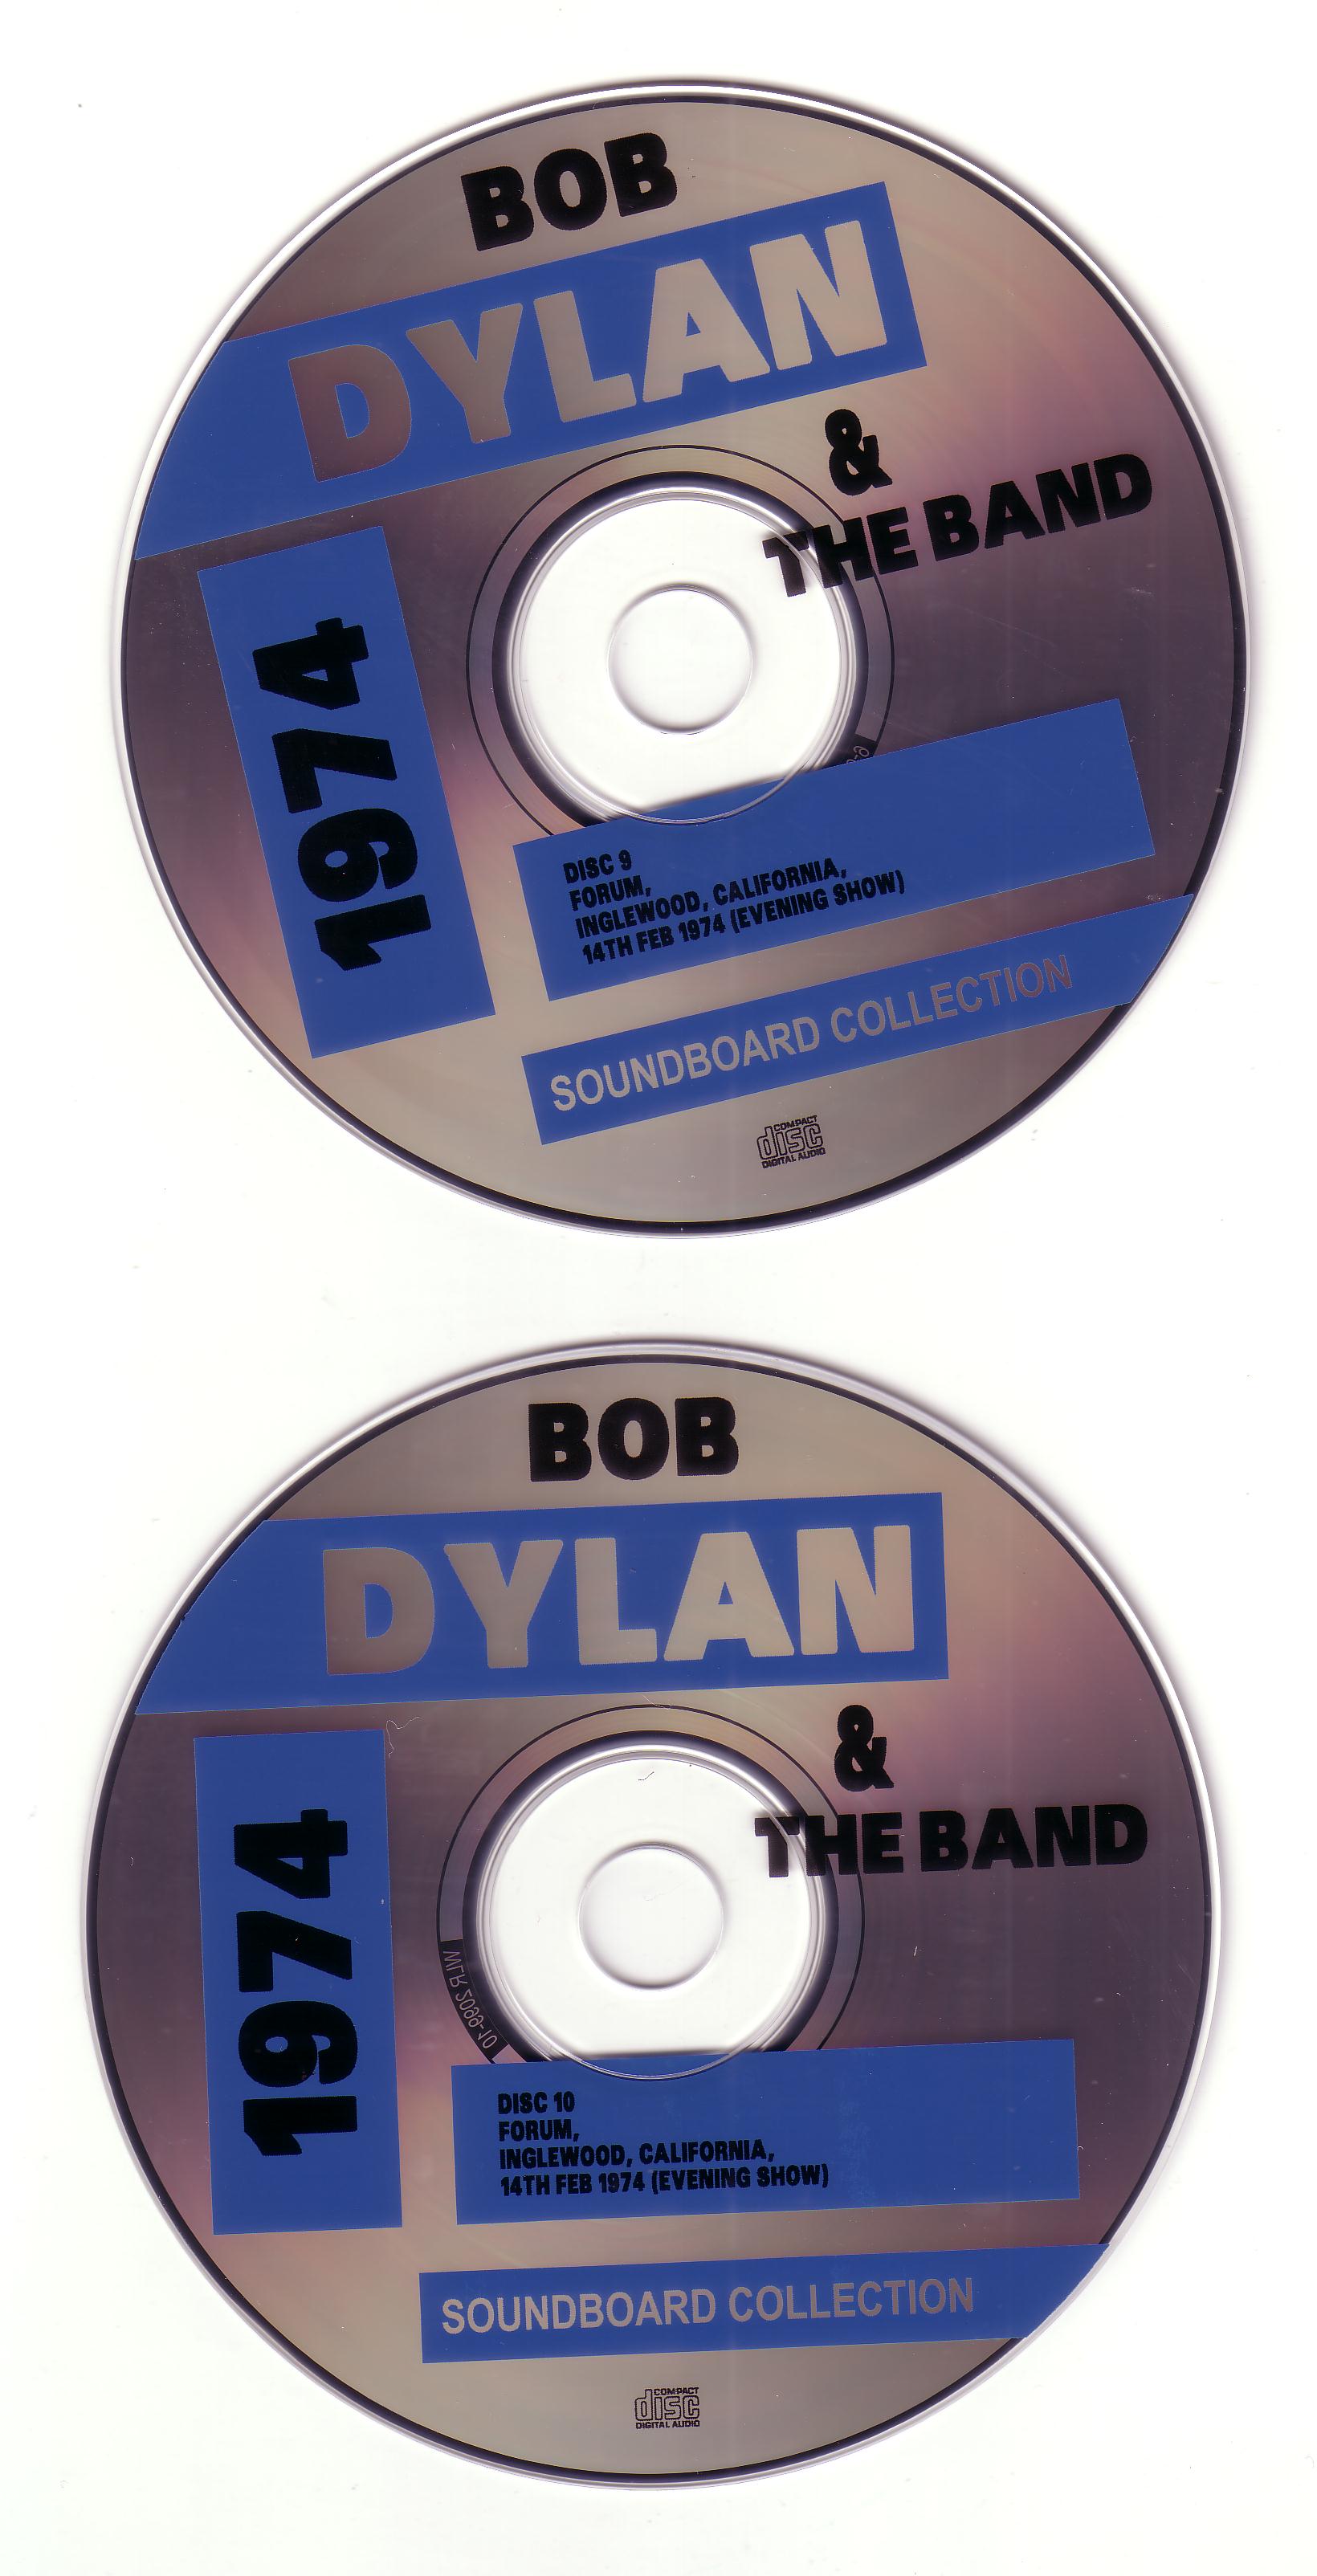 BobDylan1974SoundboardCollectionCD6-10 (15).JPG